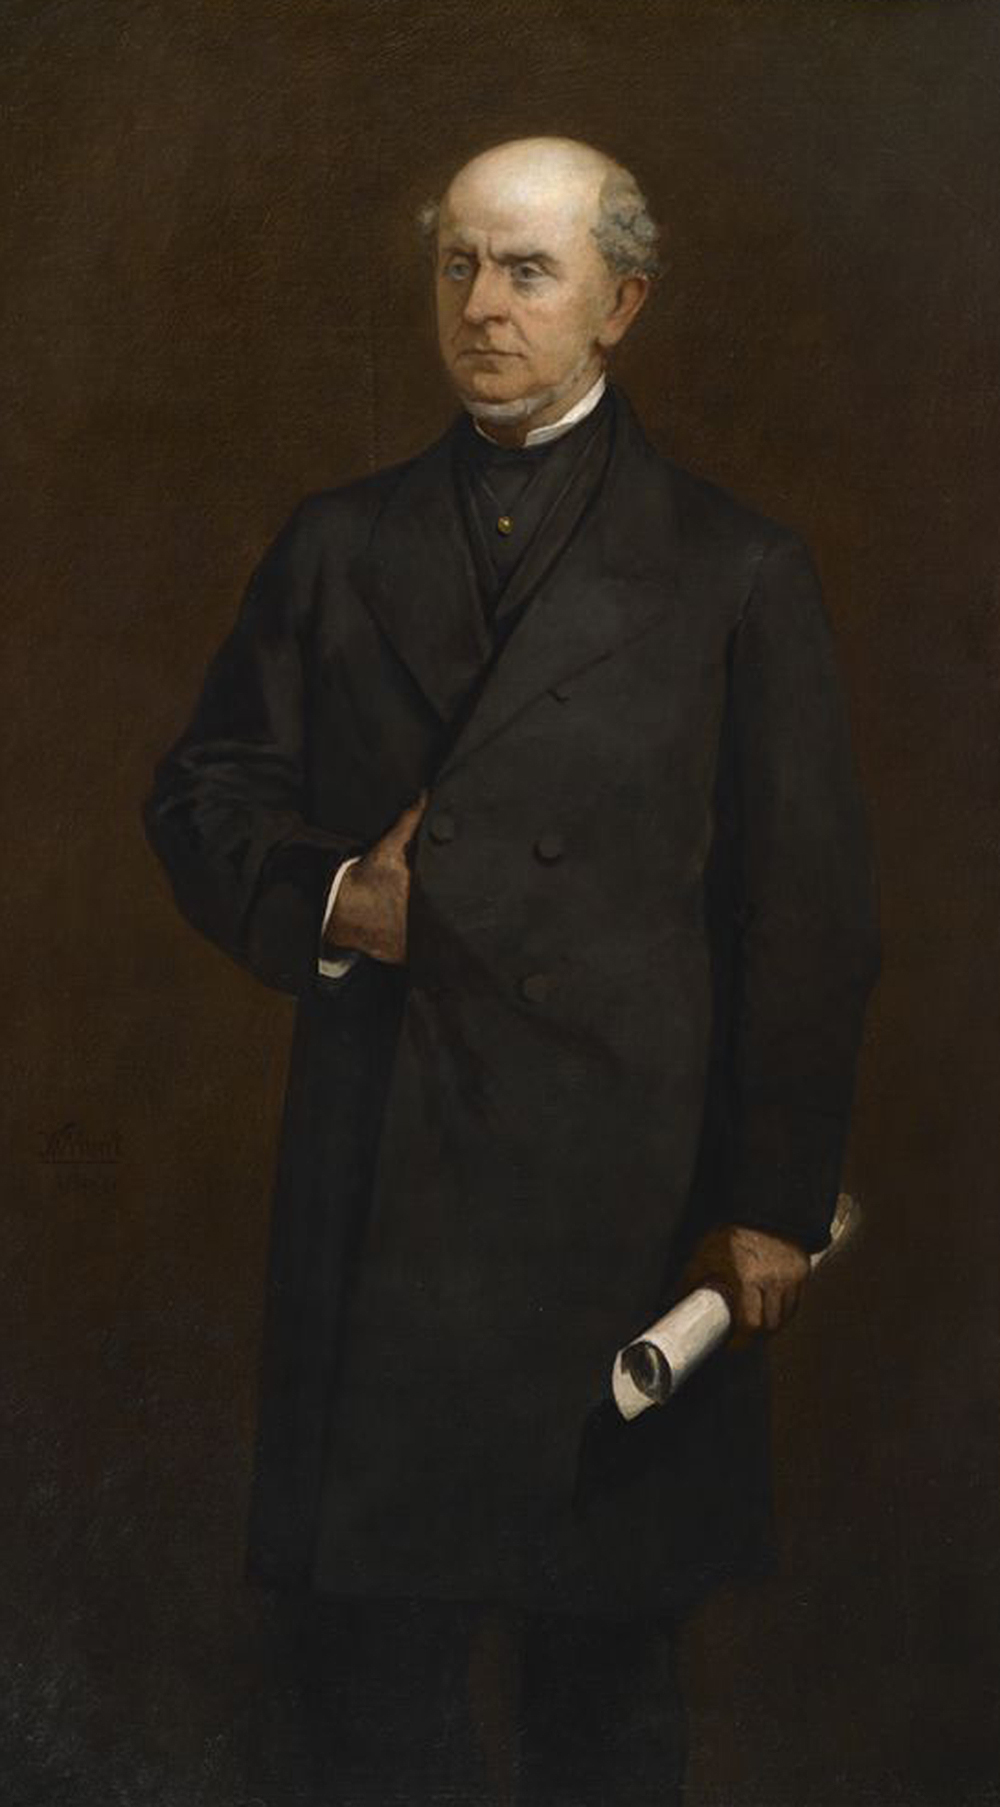 Charles Francis Adams Sr., by William Morris Hunt, 1867. Harvard University, Gift of C.F. Adams Jr. and his brothers.